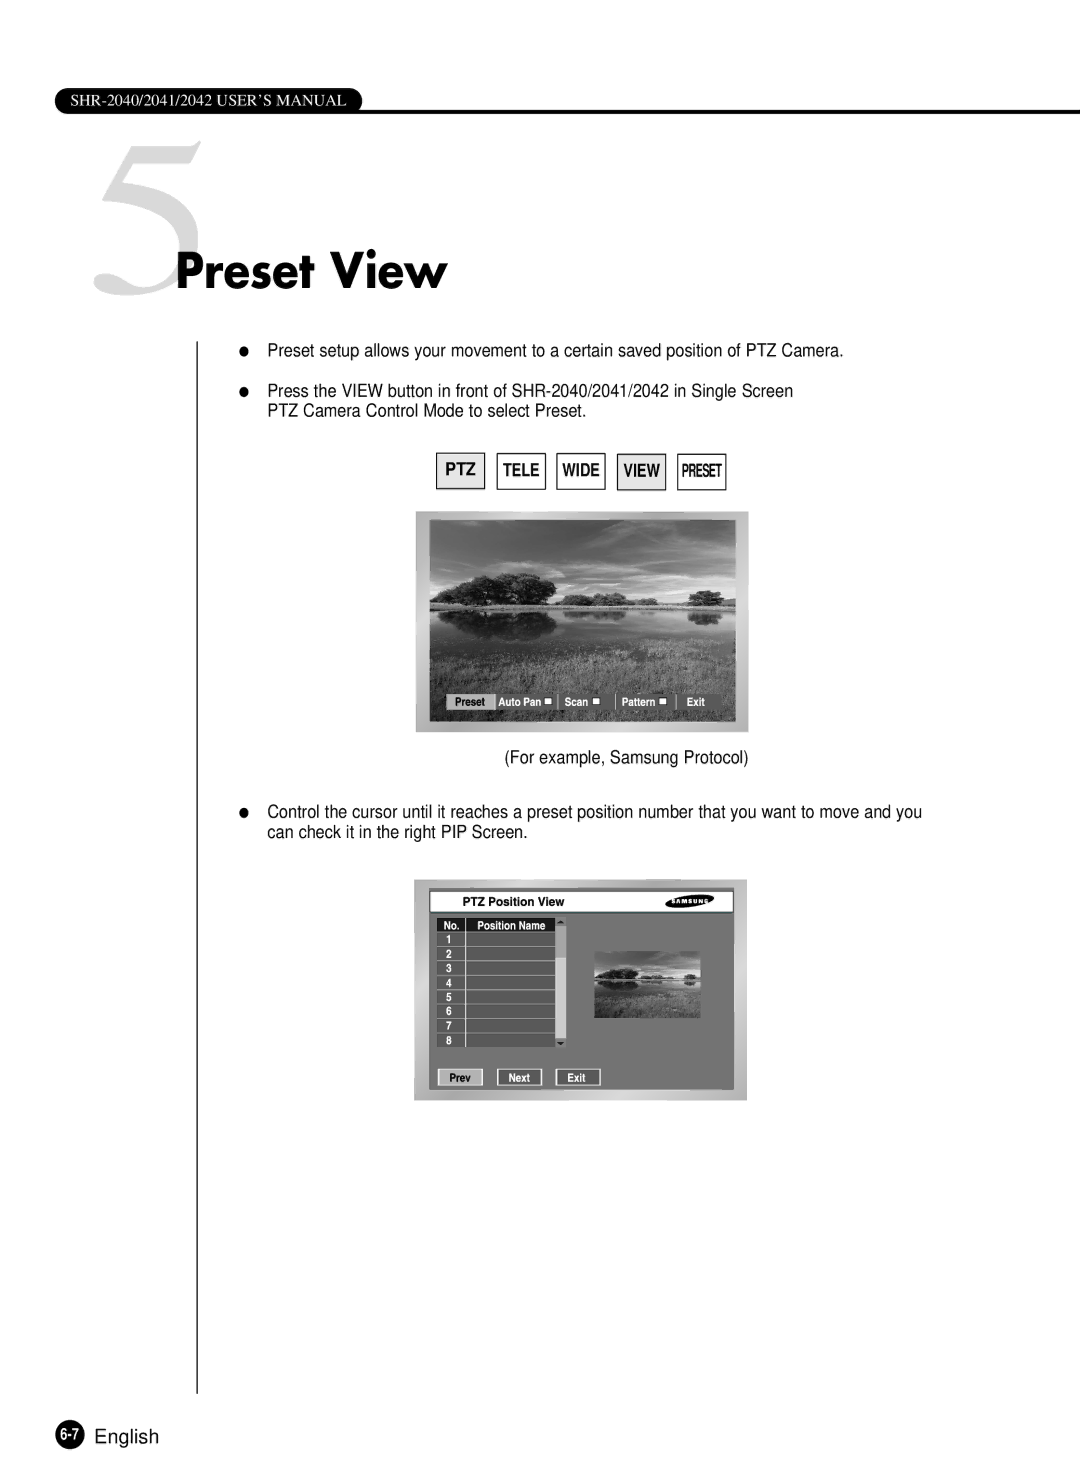 Samsung SHR-2040N, SHR-2040P manual 5Preset View, 7English 